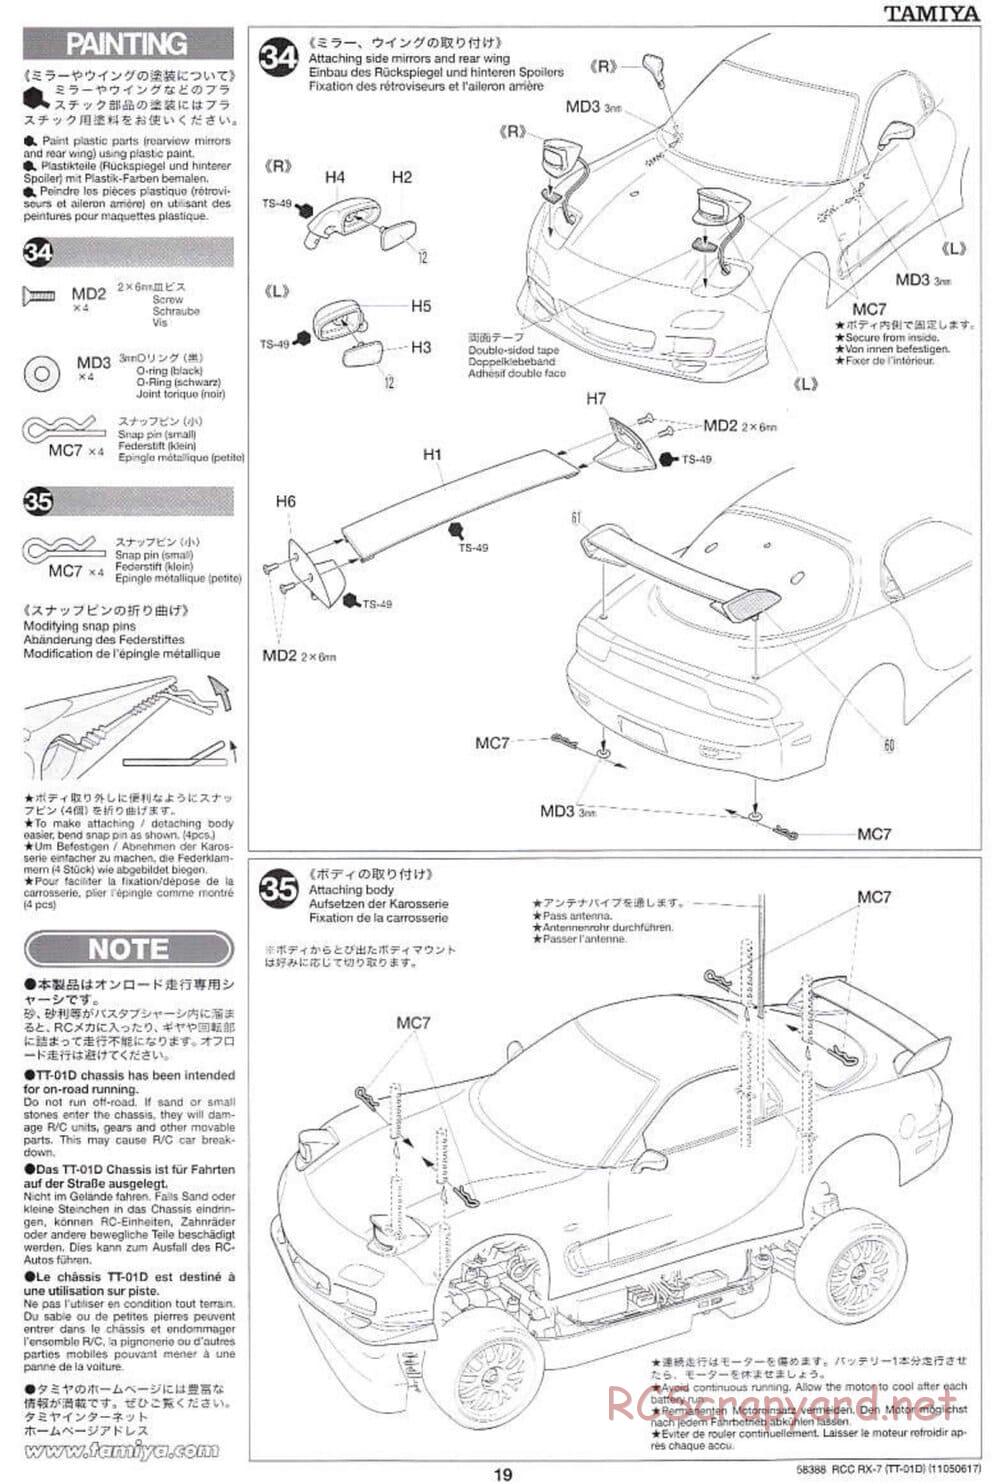 Tamiya - Mazda RX-7 - Drift Spec - TT-01D Chassis - Manual - Page 19